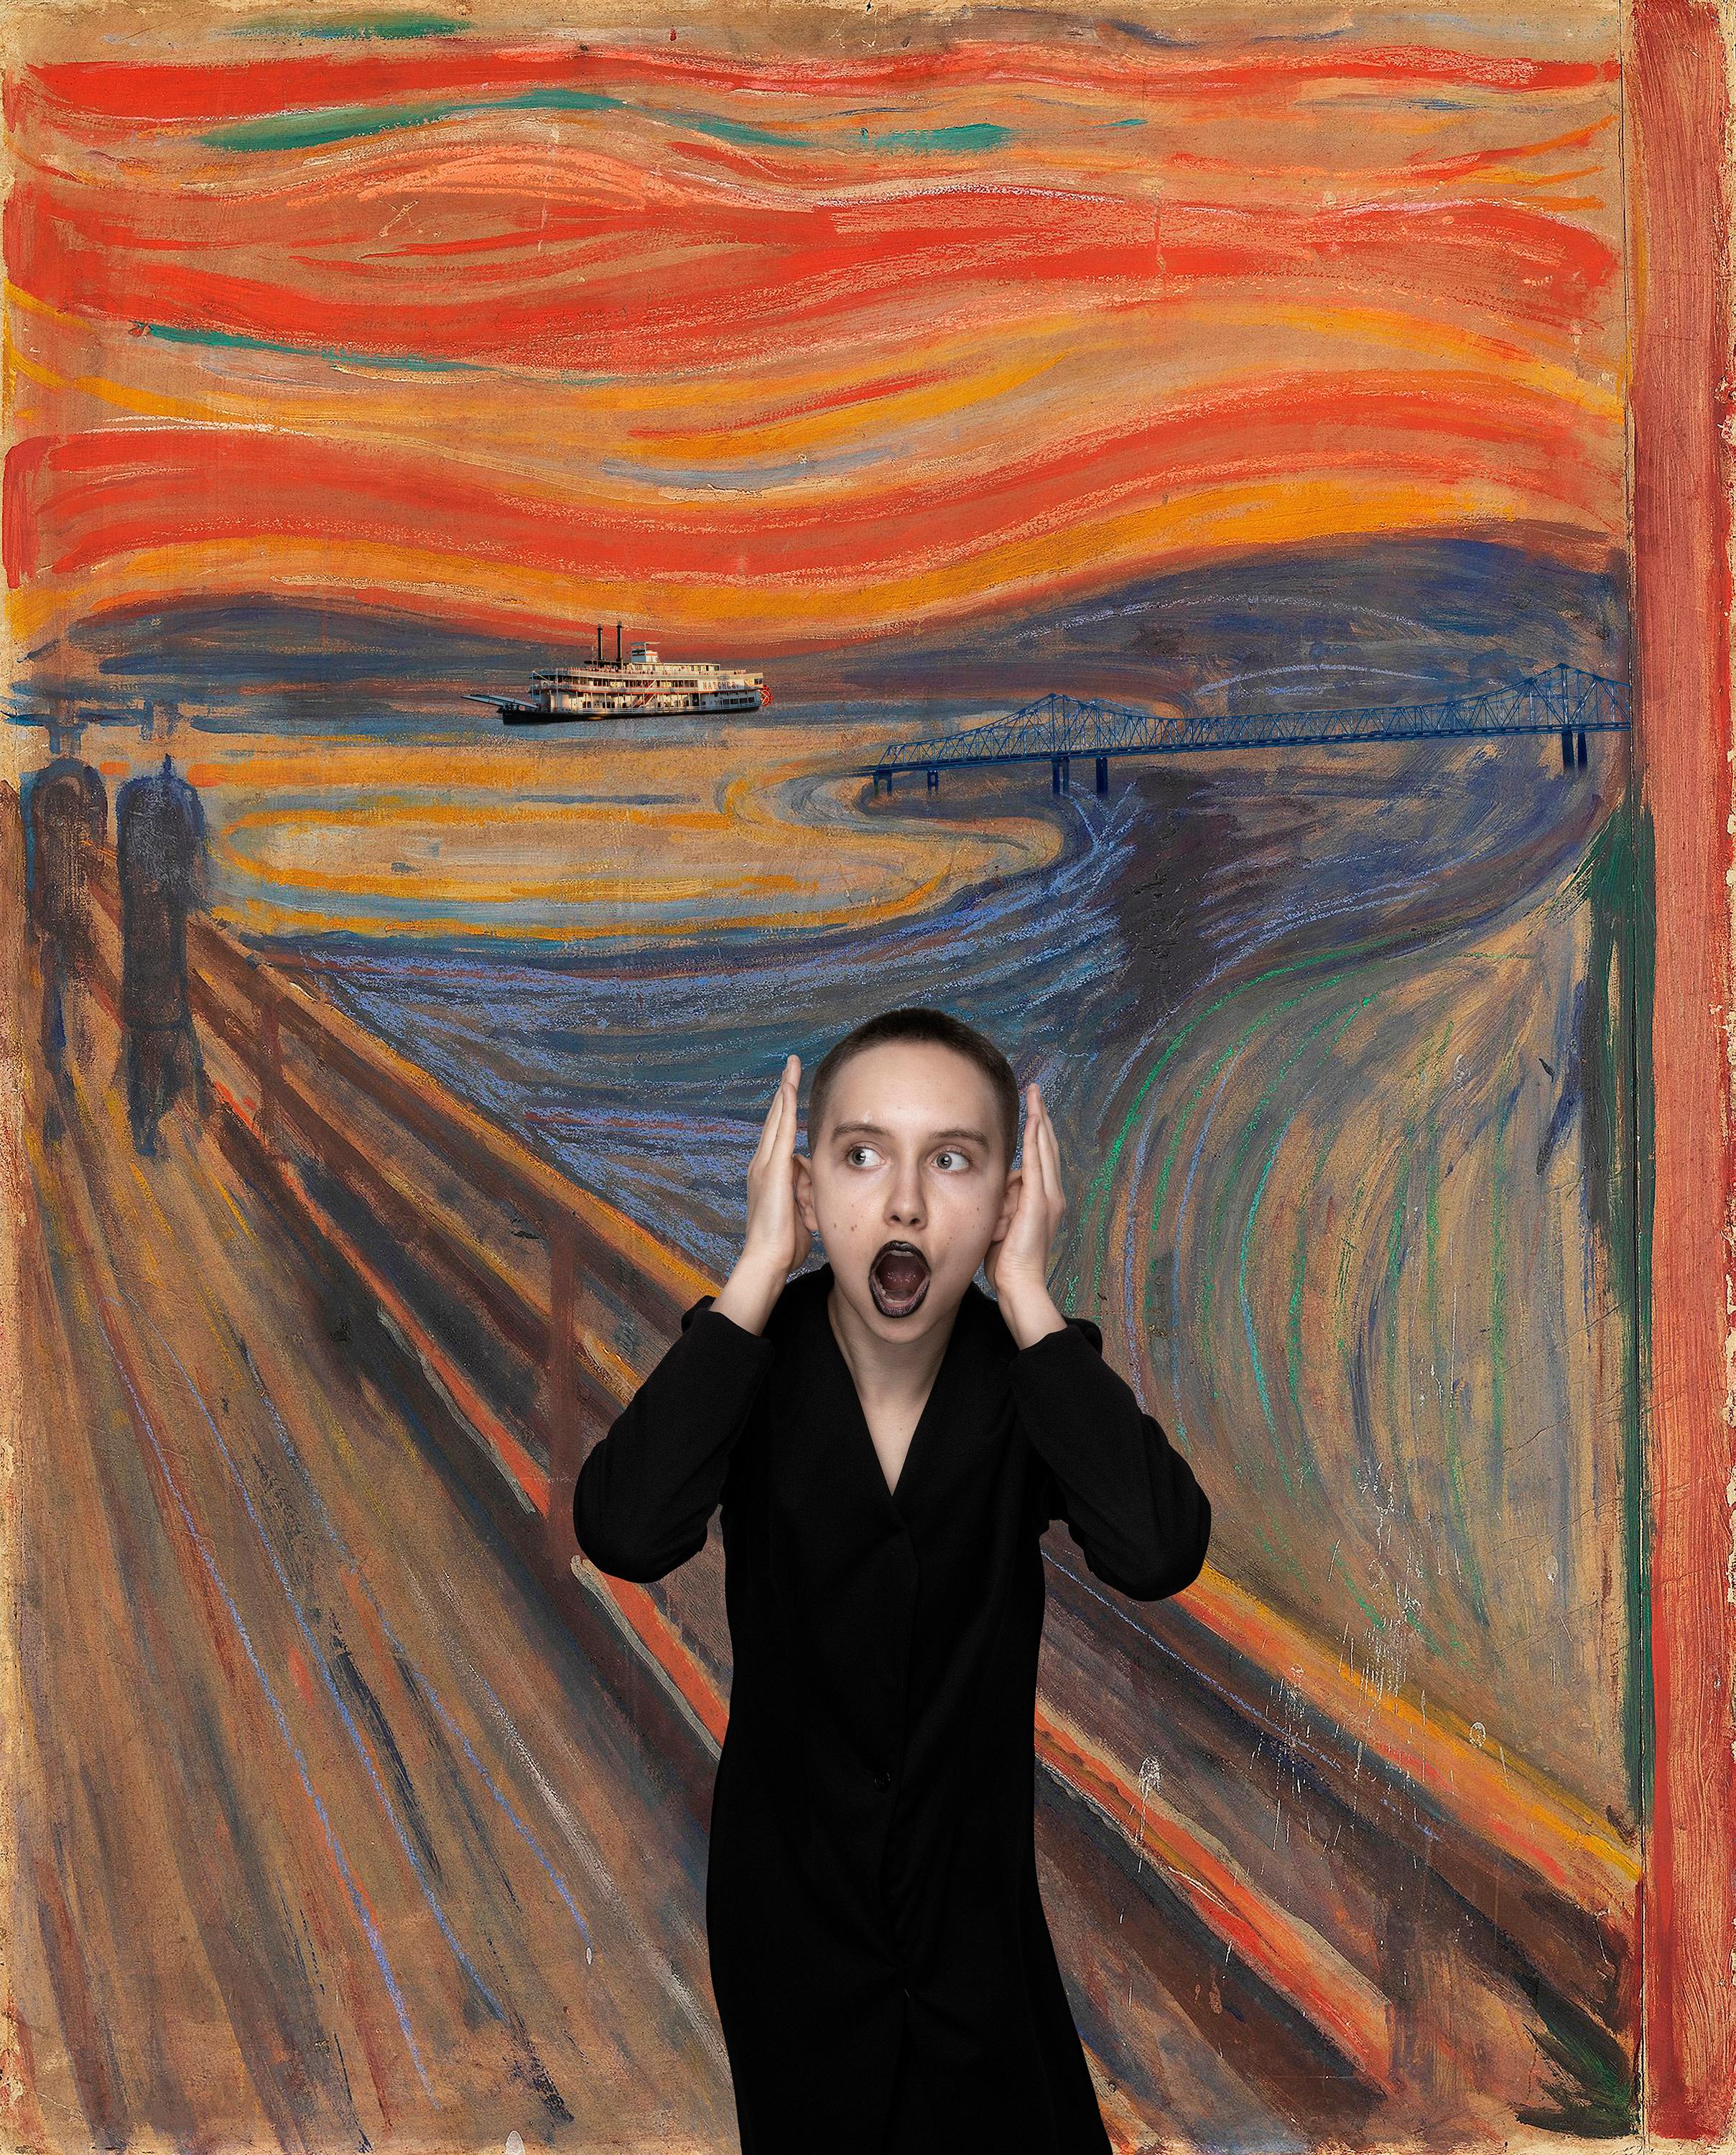 E2 - Kleinveld & Julien Figurative Photograph - Ode to Munch's 'The Scream'